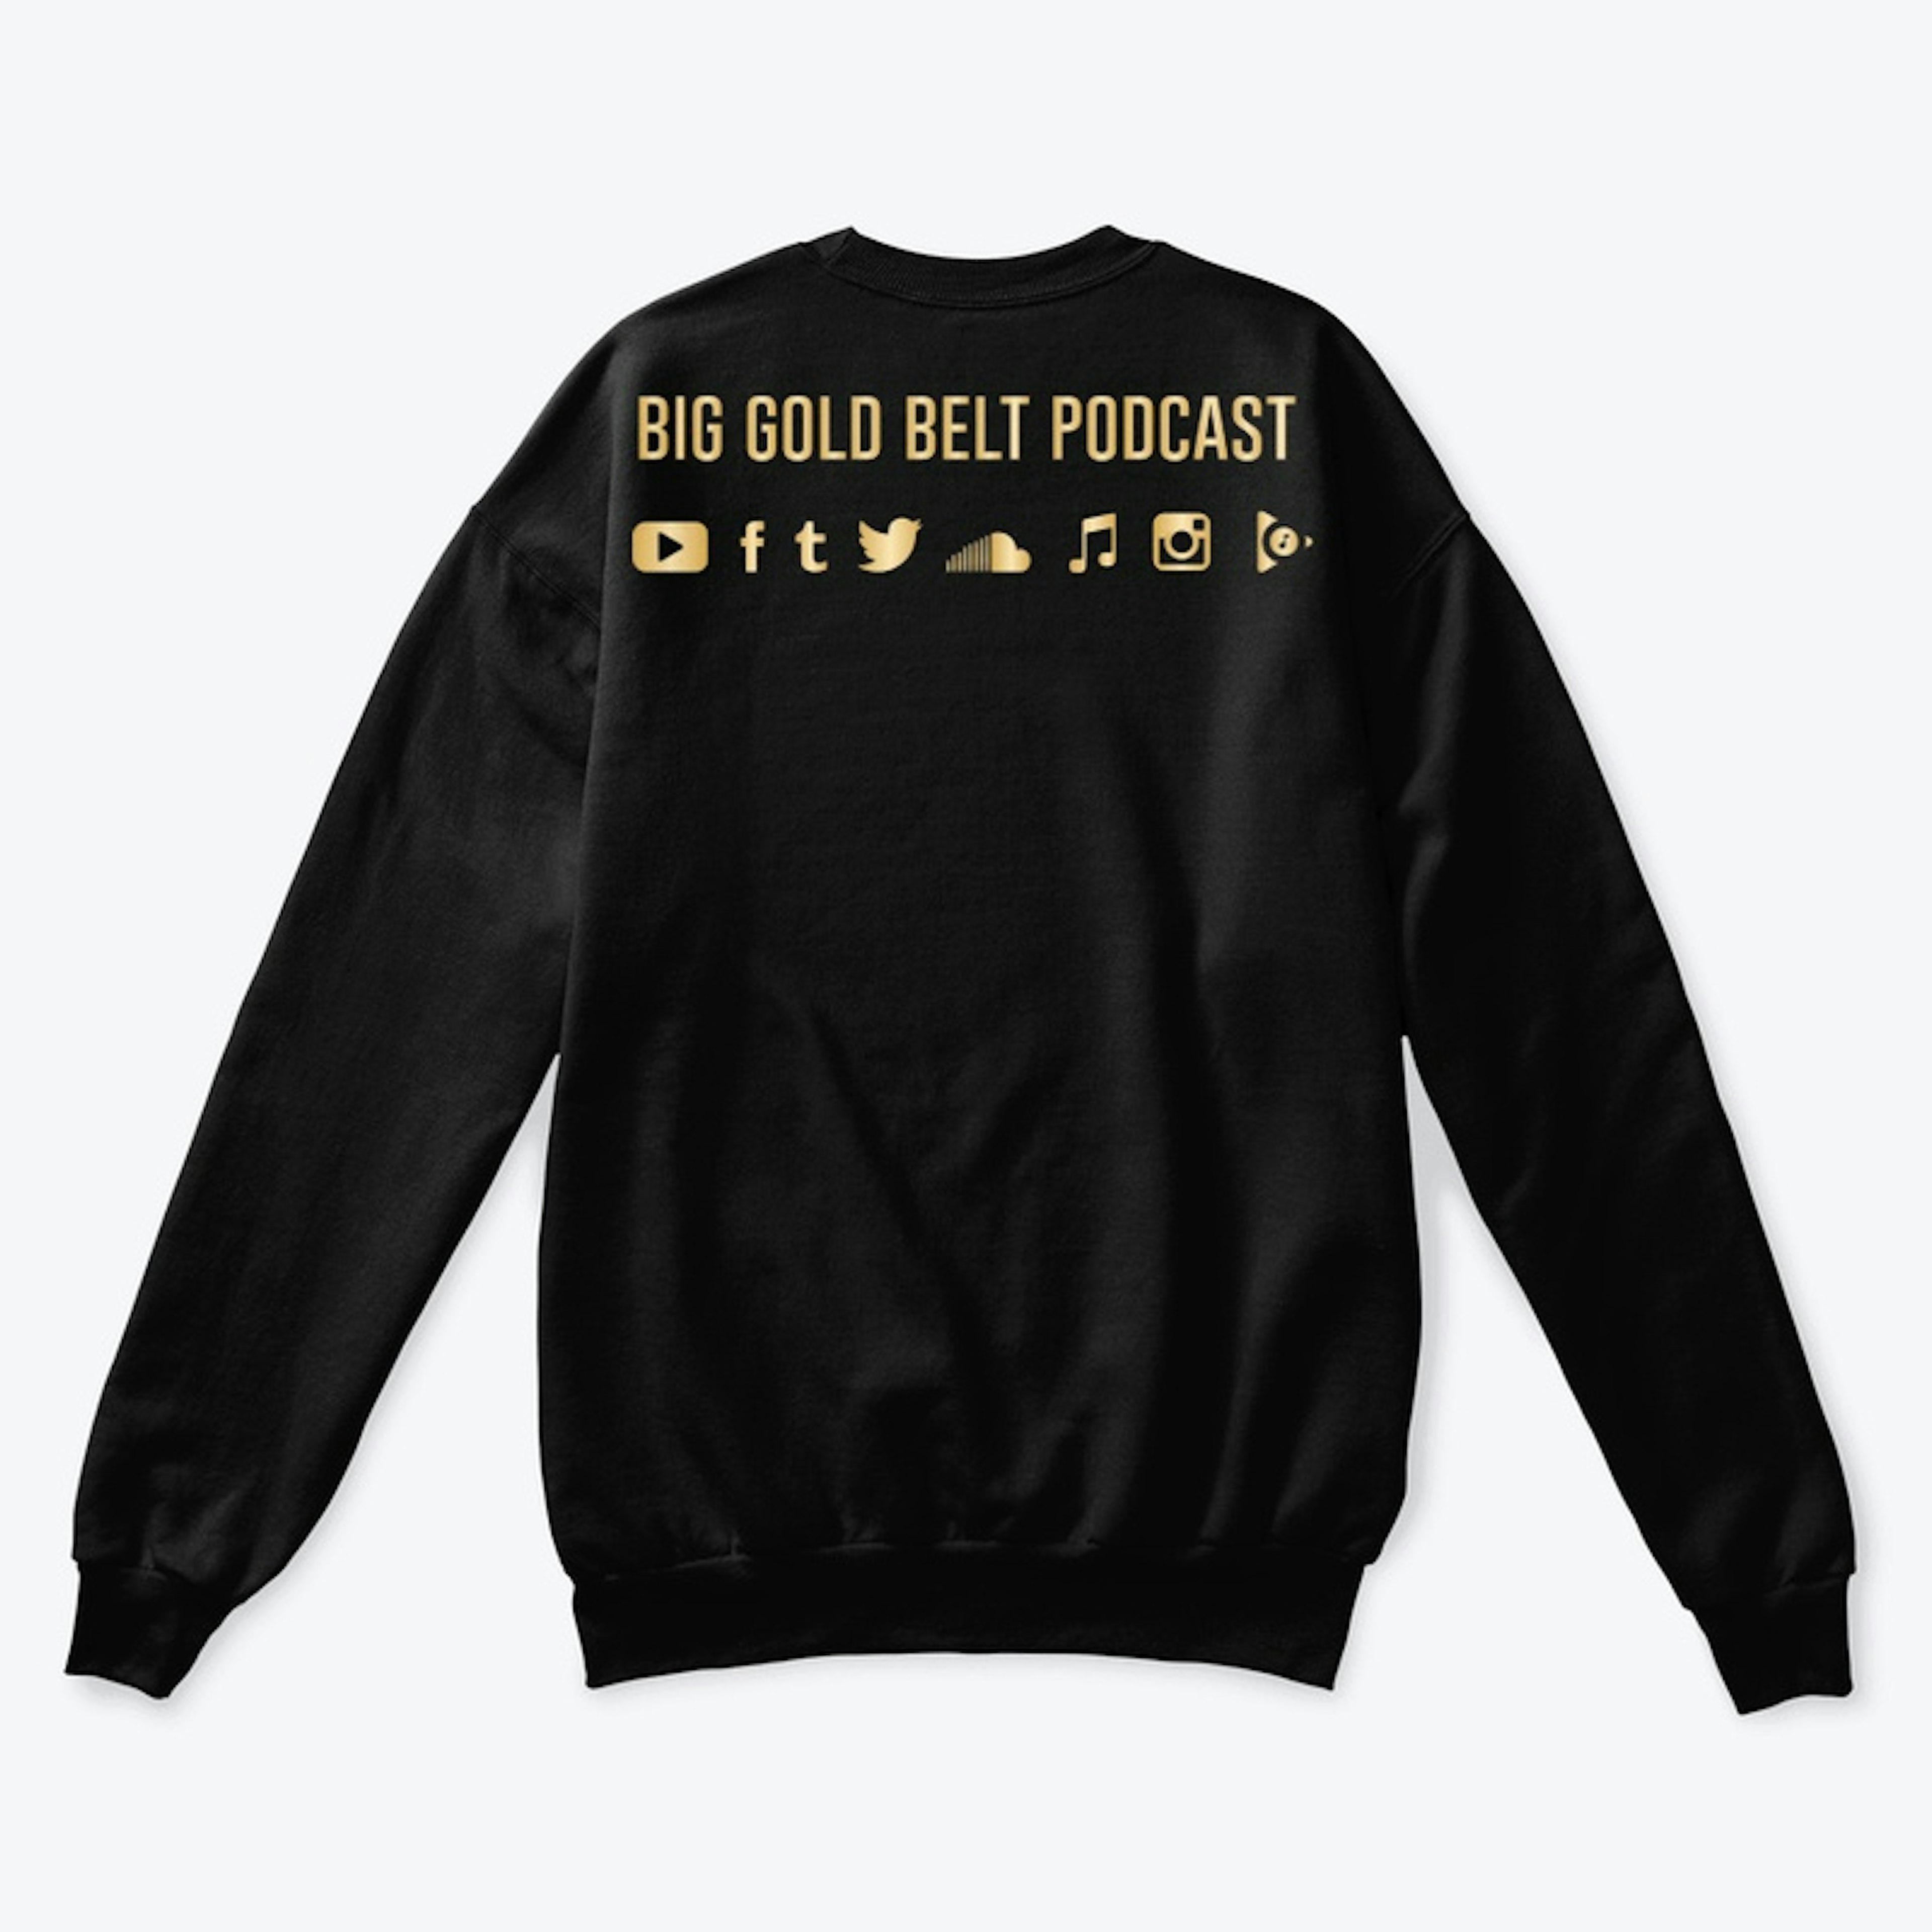 Apparel for the Big Gold Belt Podcast